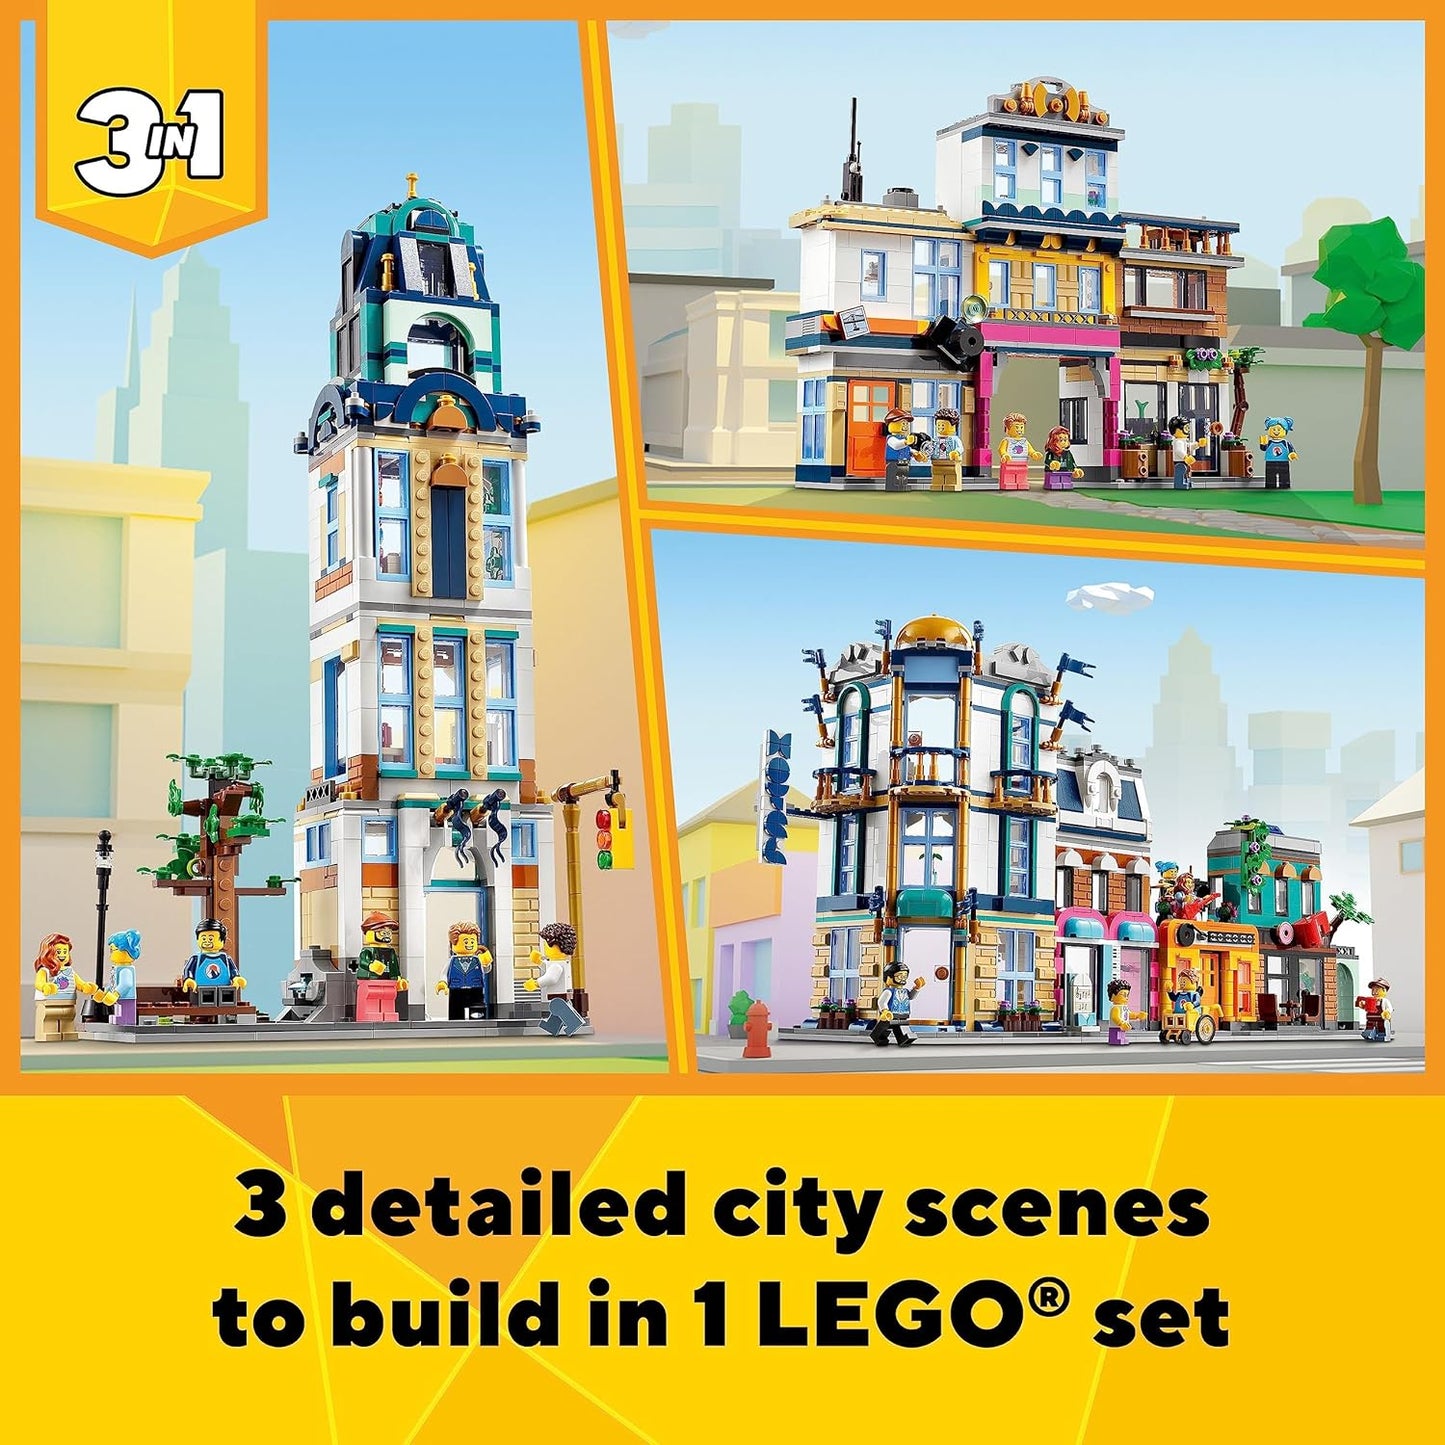 LEGO Creator - 3-in-1 Main Street 31141